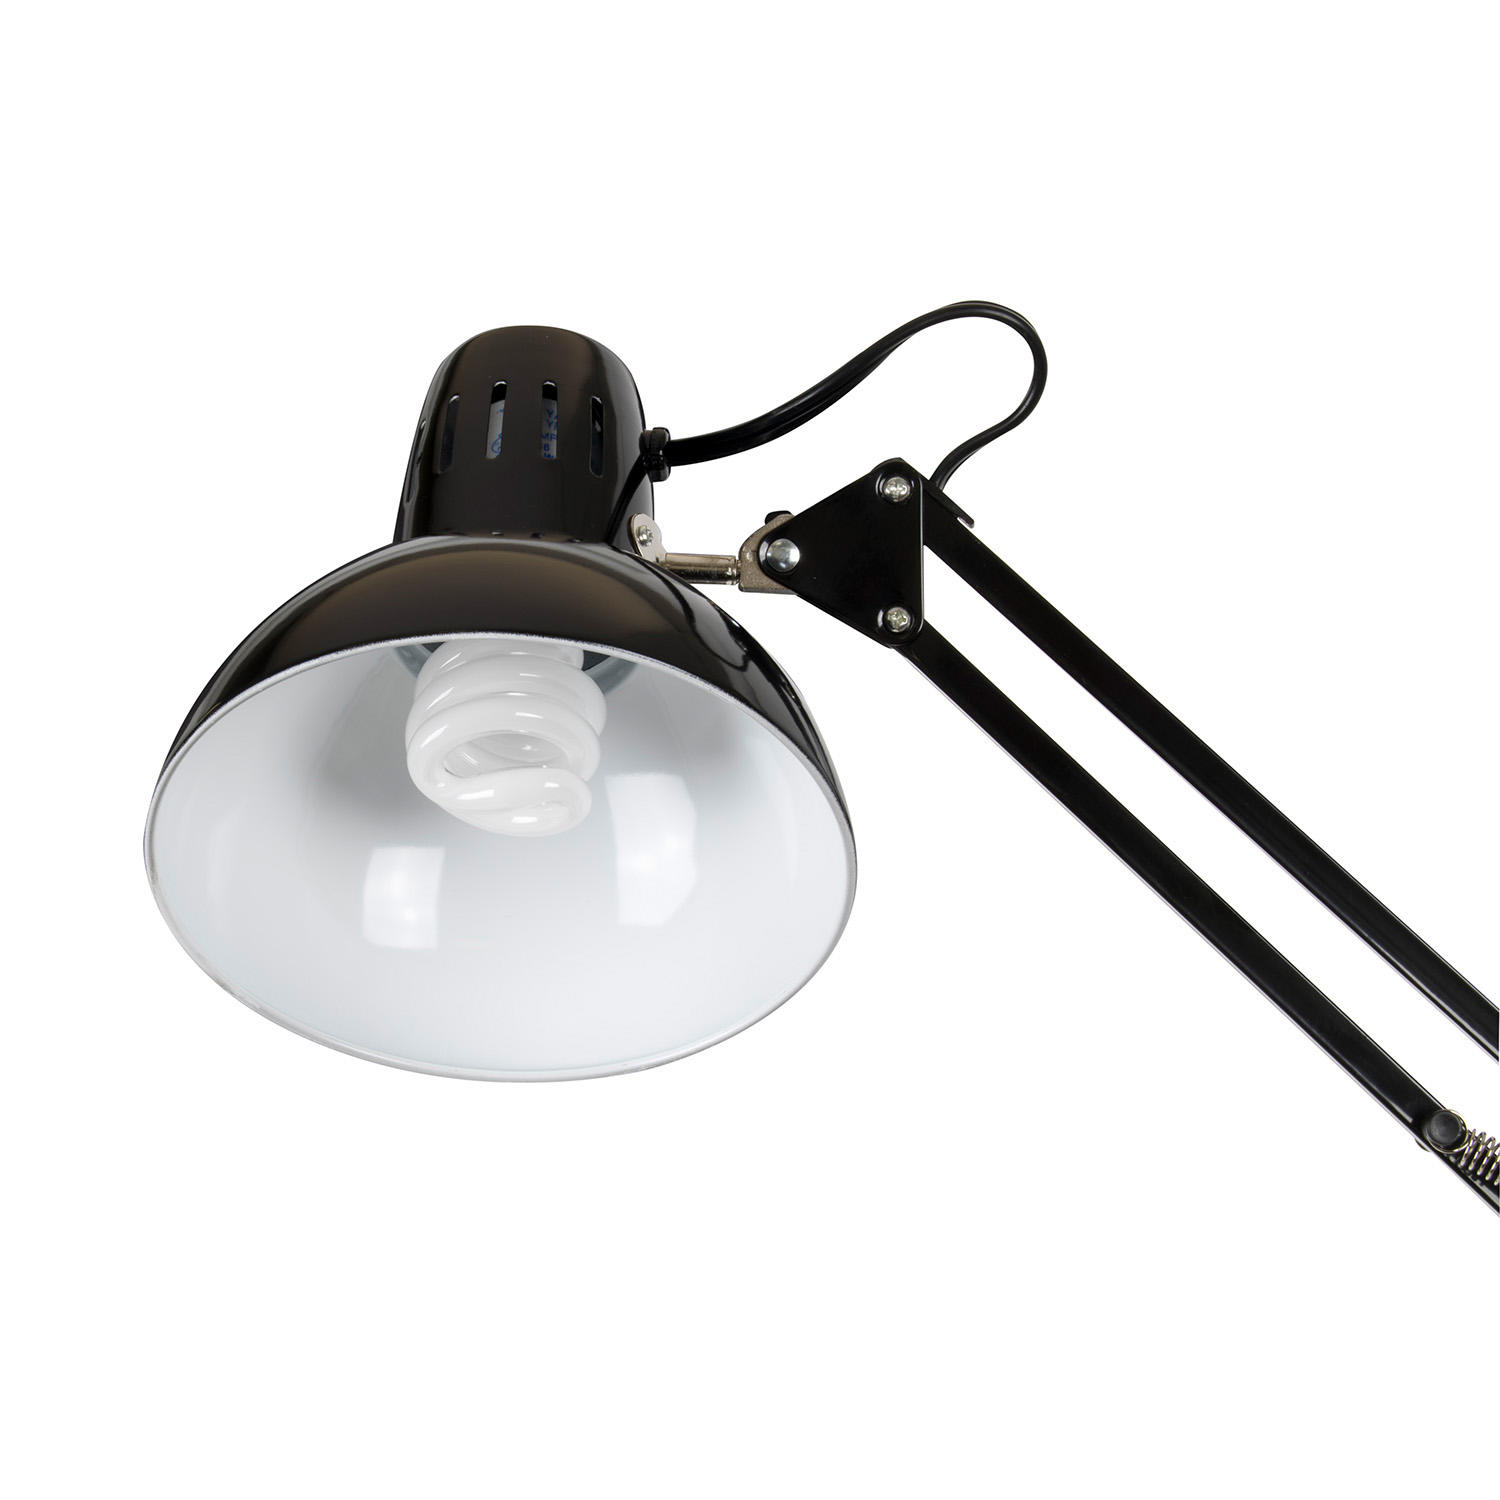 Studio Designs Swing Arm Lamp with 13-watt CFL Bulb， Black